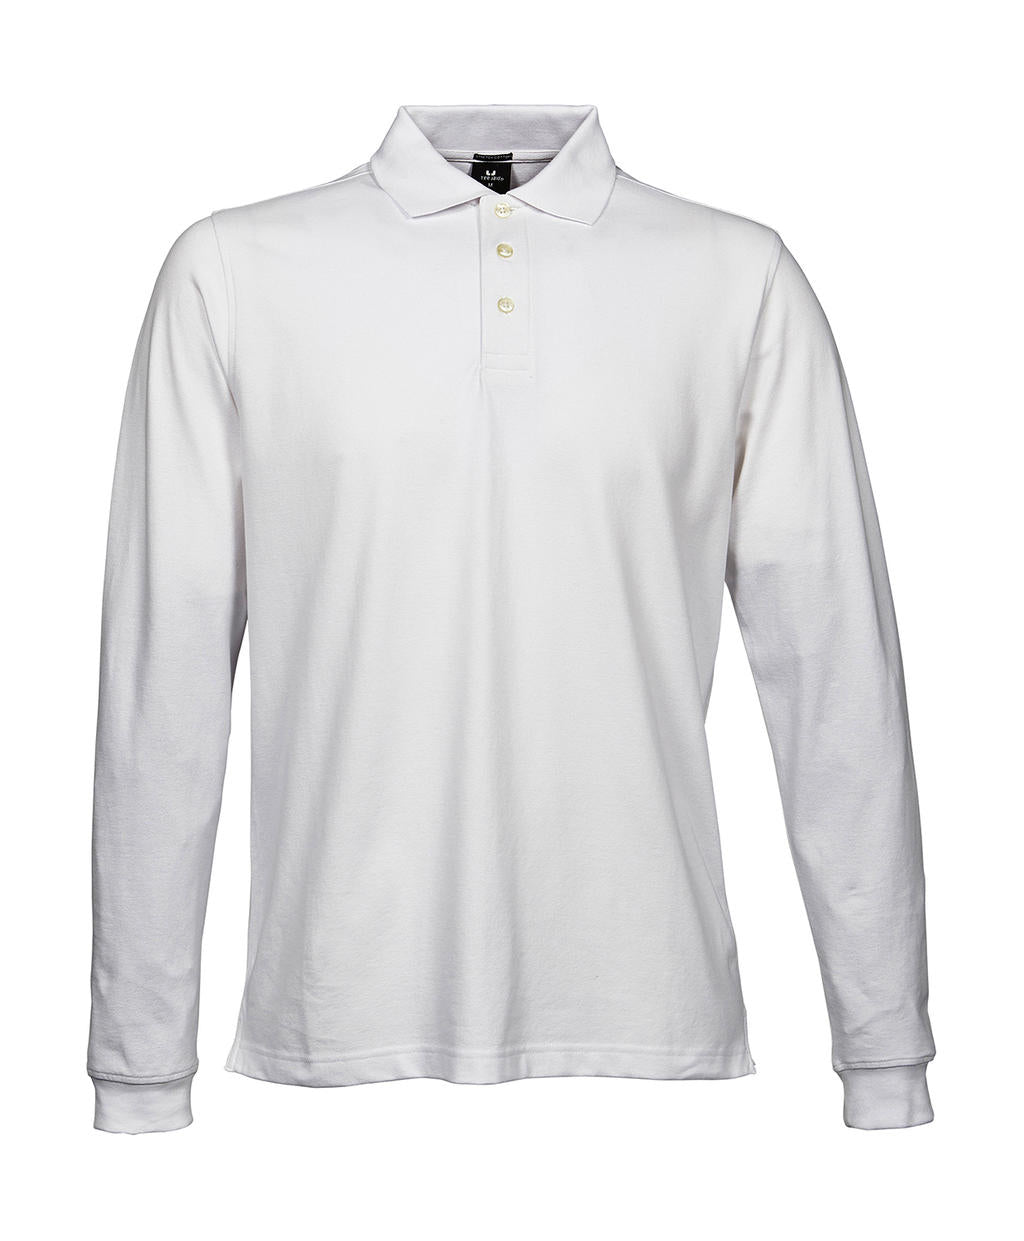 Tee Jays Herren T-Shirt Polohemd langarm Poloshirt Polo Shirt